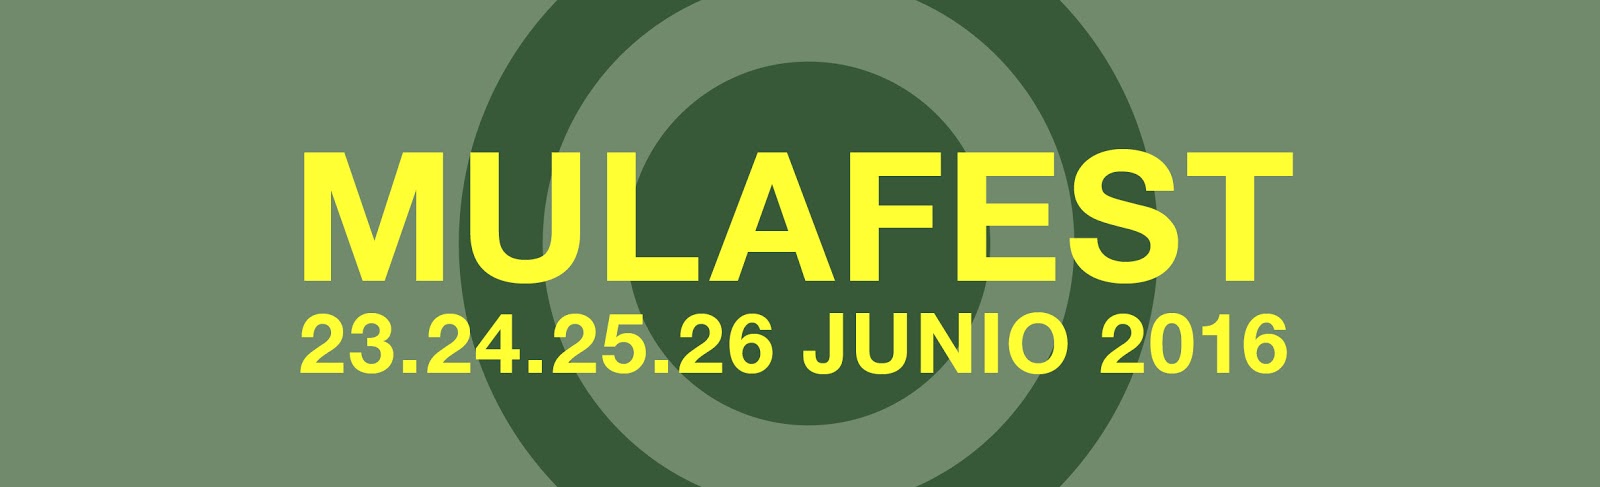 Mulafest 2016 completa su cartel